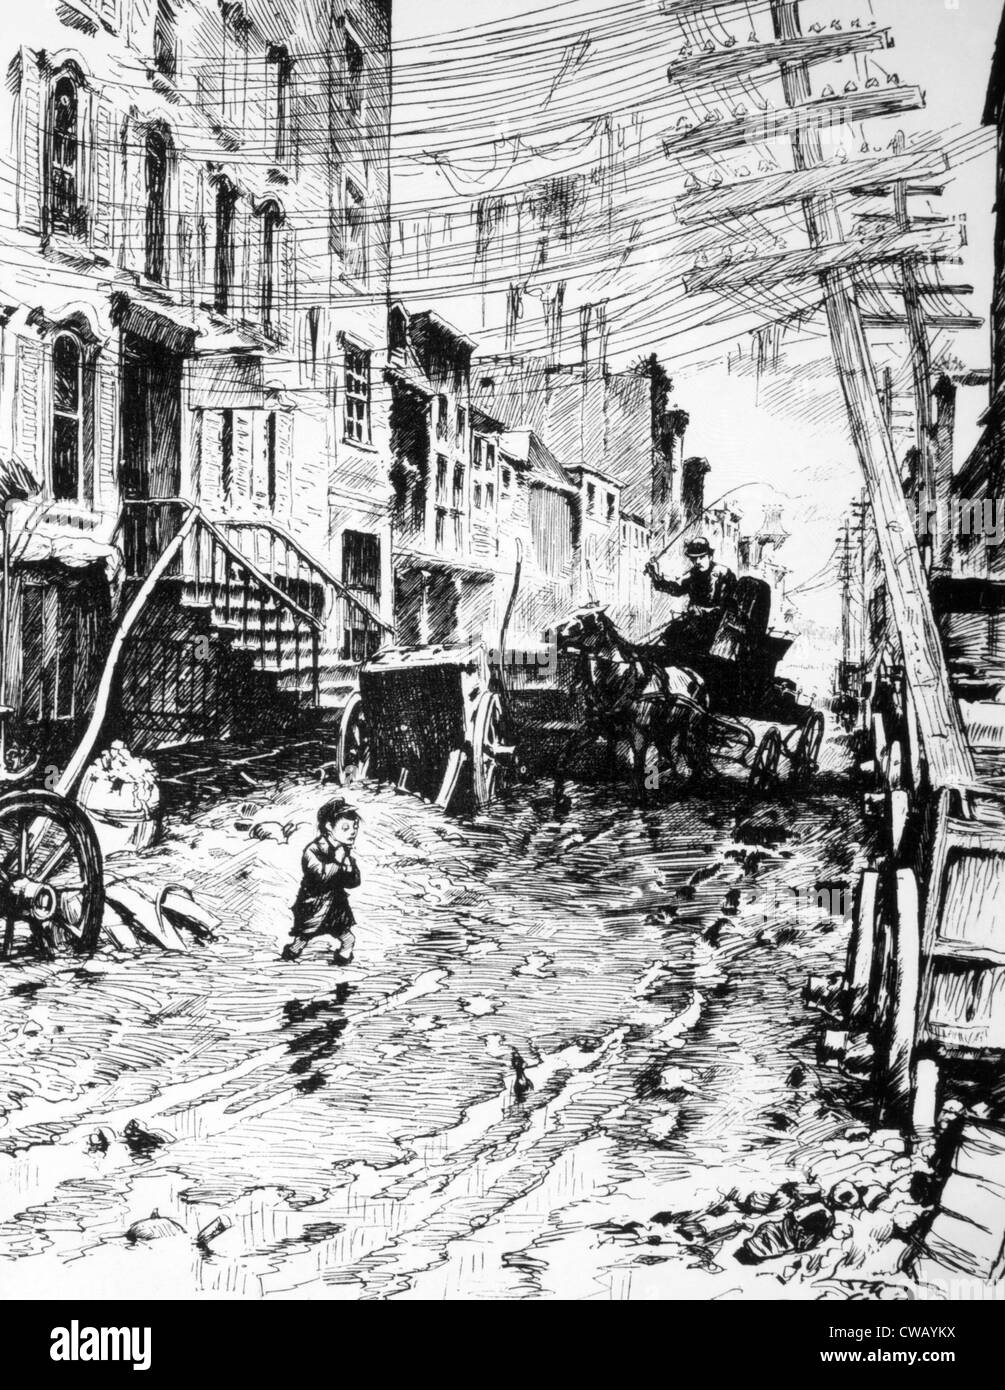 The slums of New York, c. 1880. Cartoon by William Allen Rogers in Harper's Weekly Stock Photo